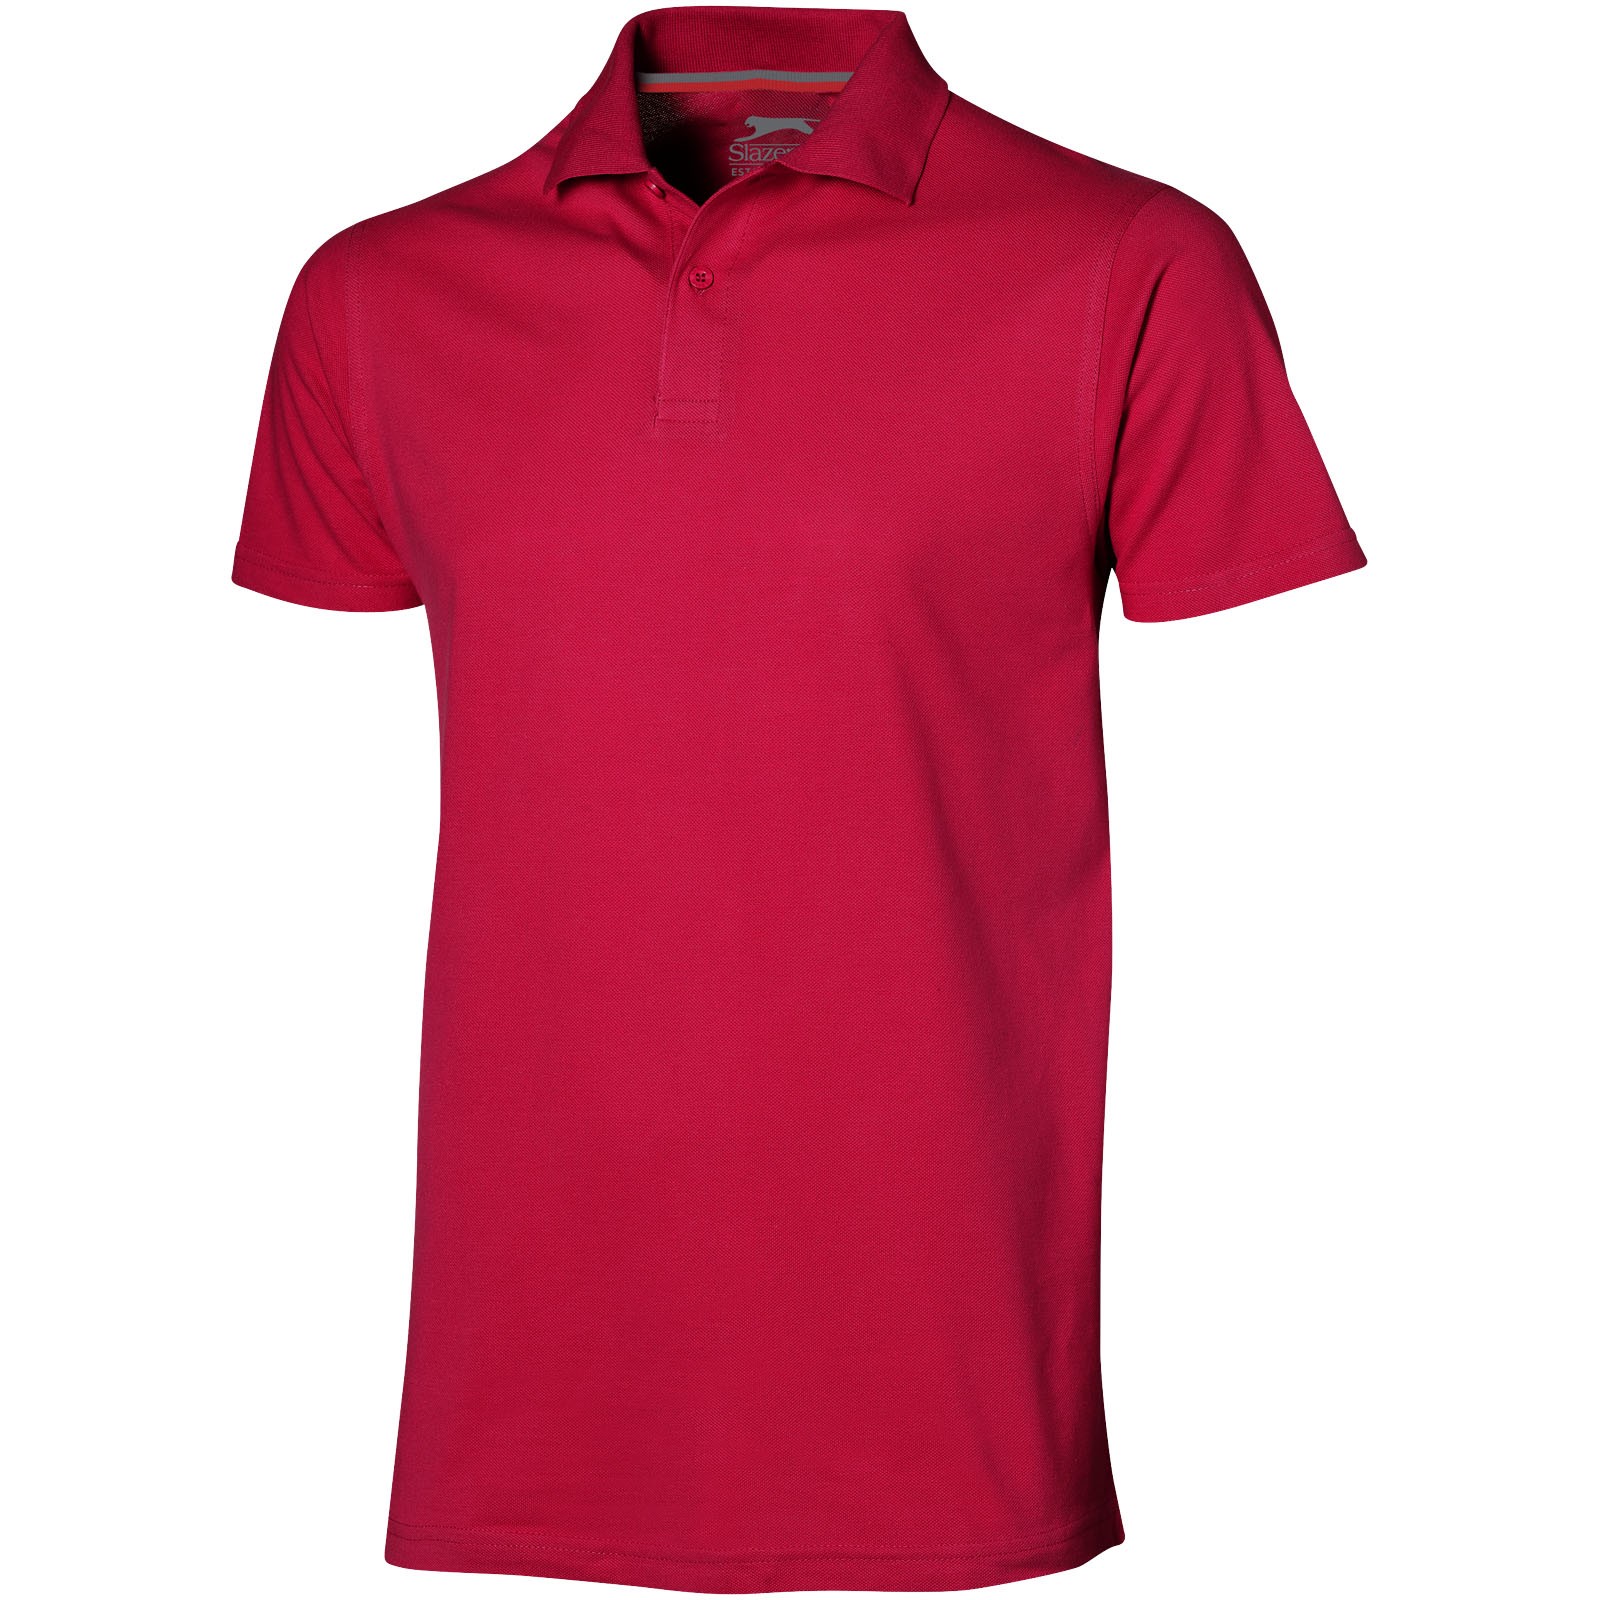 Advantage short sleeve men's polo - Red / XL